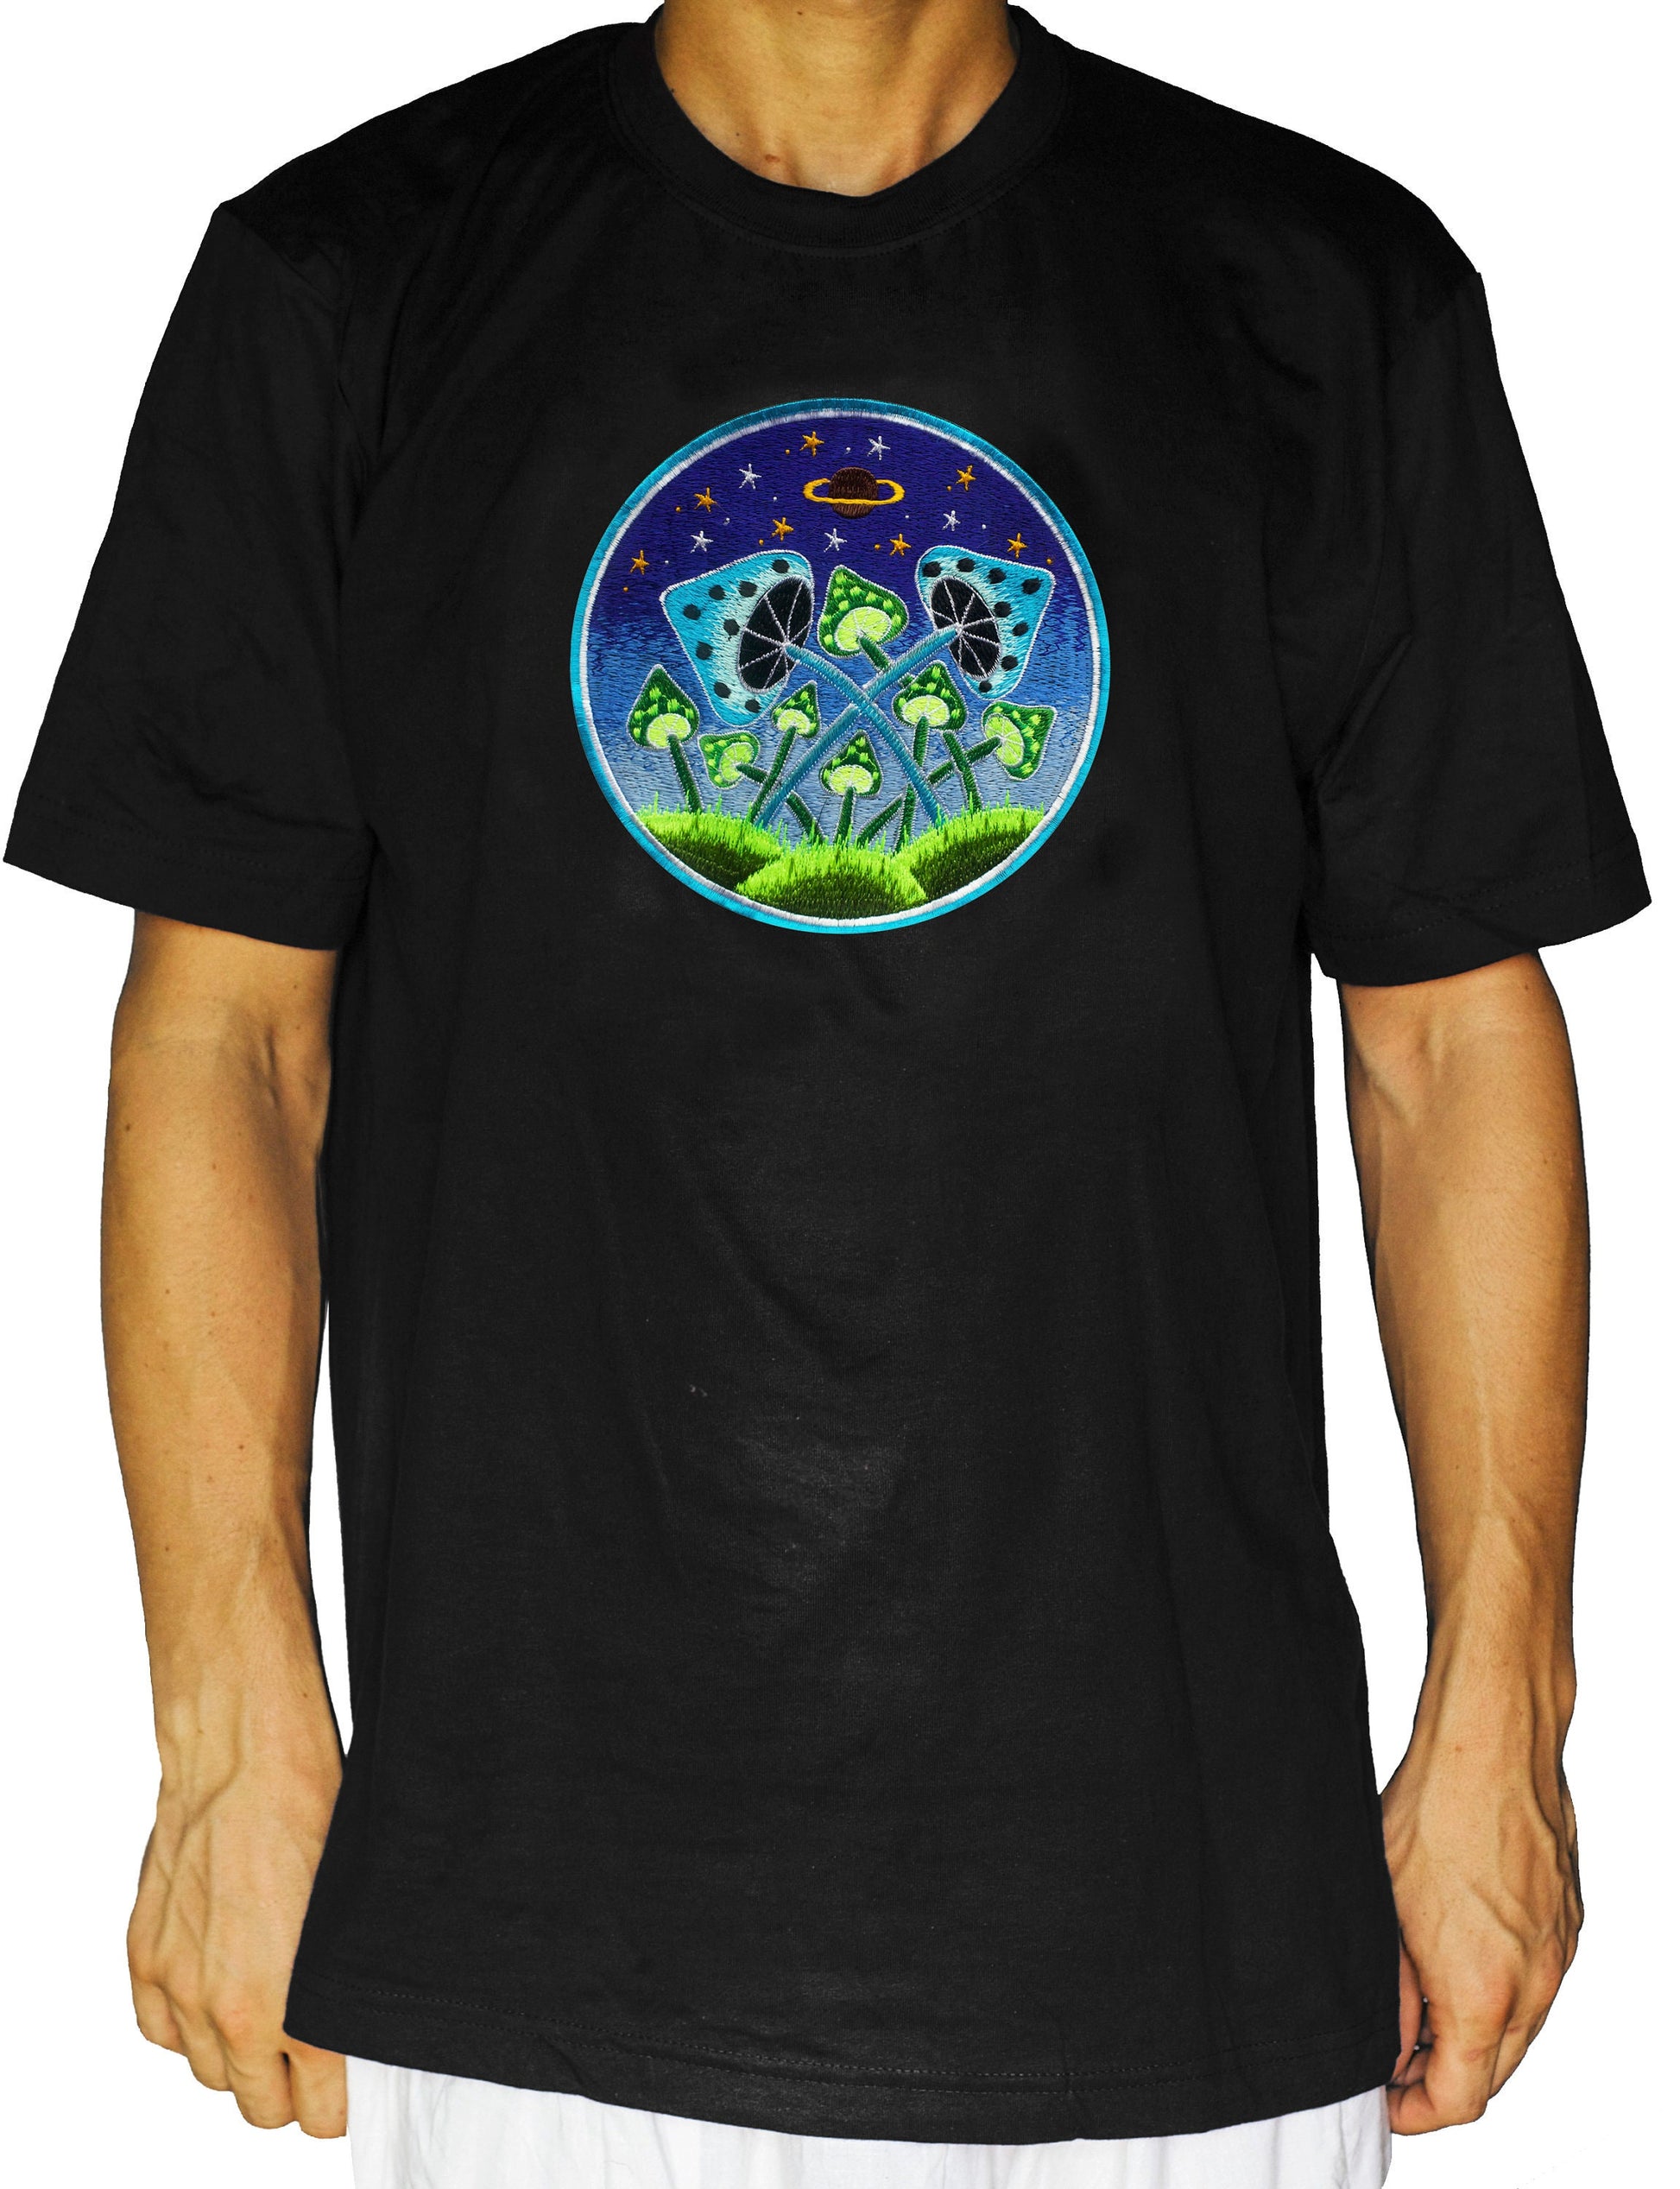 Blue Magic Mushroom T-Shirt Space Mandala Shrooms embroidery handmade mushroom yantra goa tshirt psychedelic psy trance mandala shirt